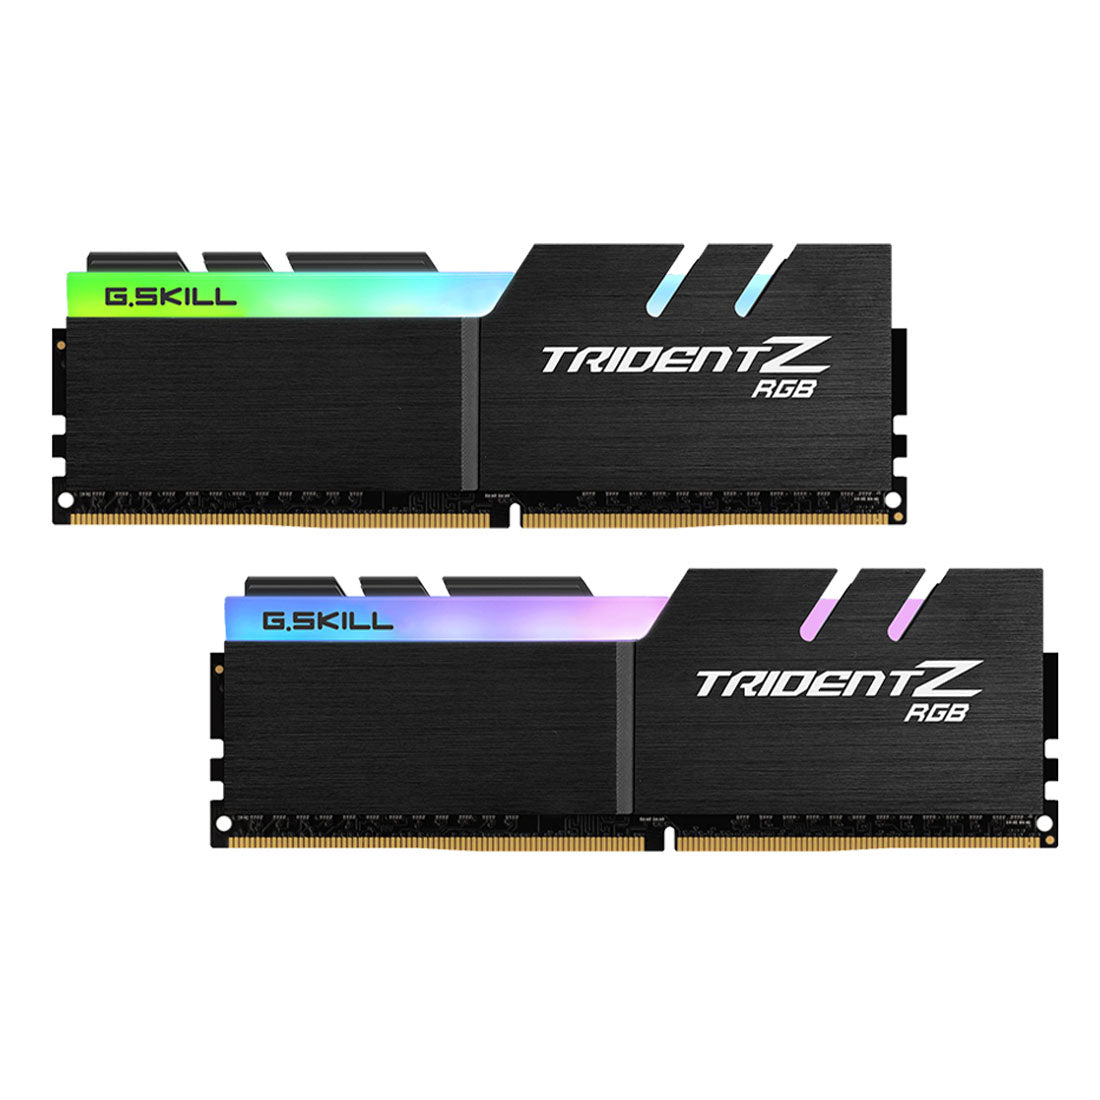 G.SKILL Trident Z RGB 16GB(2x8GB) DDR4 RAM 4000MHz Desktop Memory